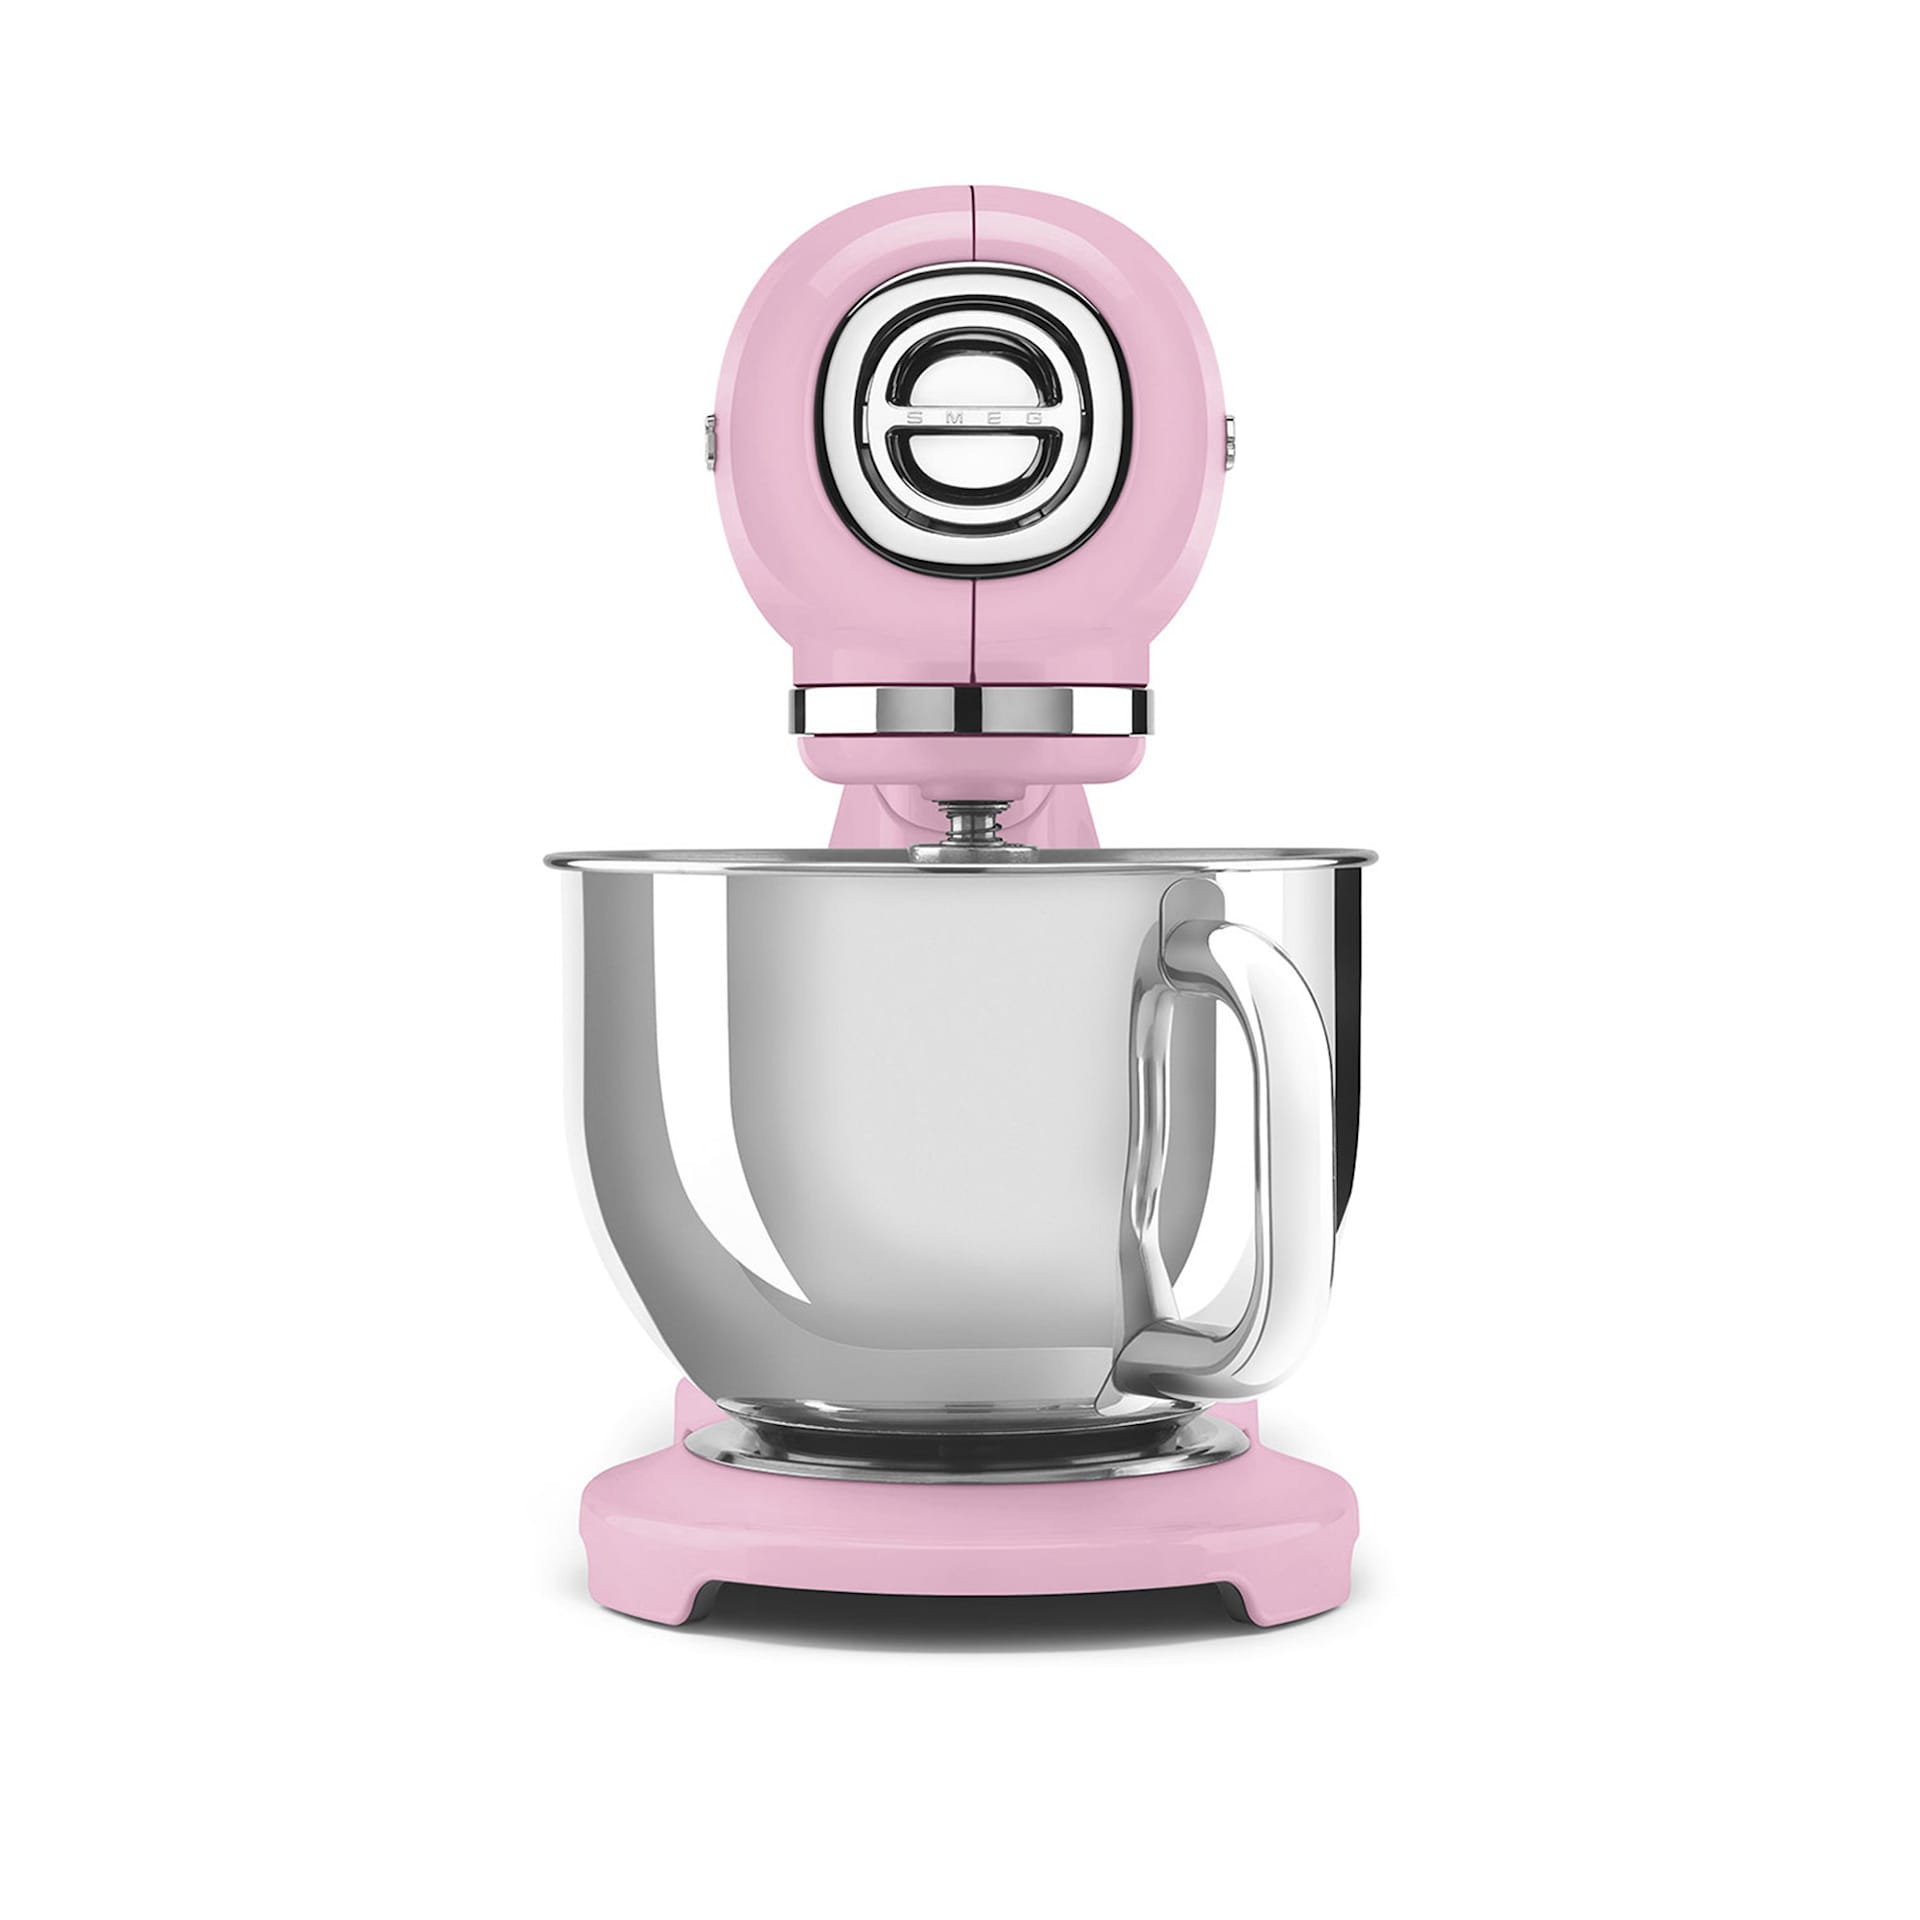 Smeg Stand Mixer Full Color Pink - Smeg - NO GA